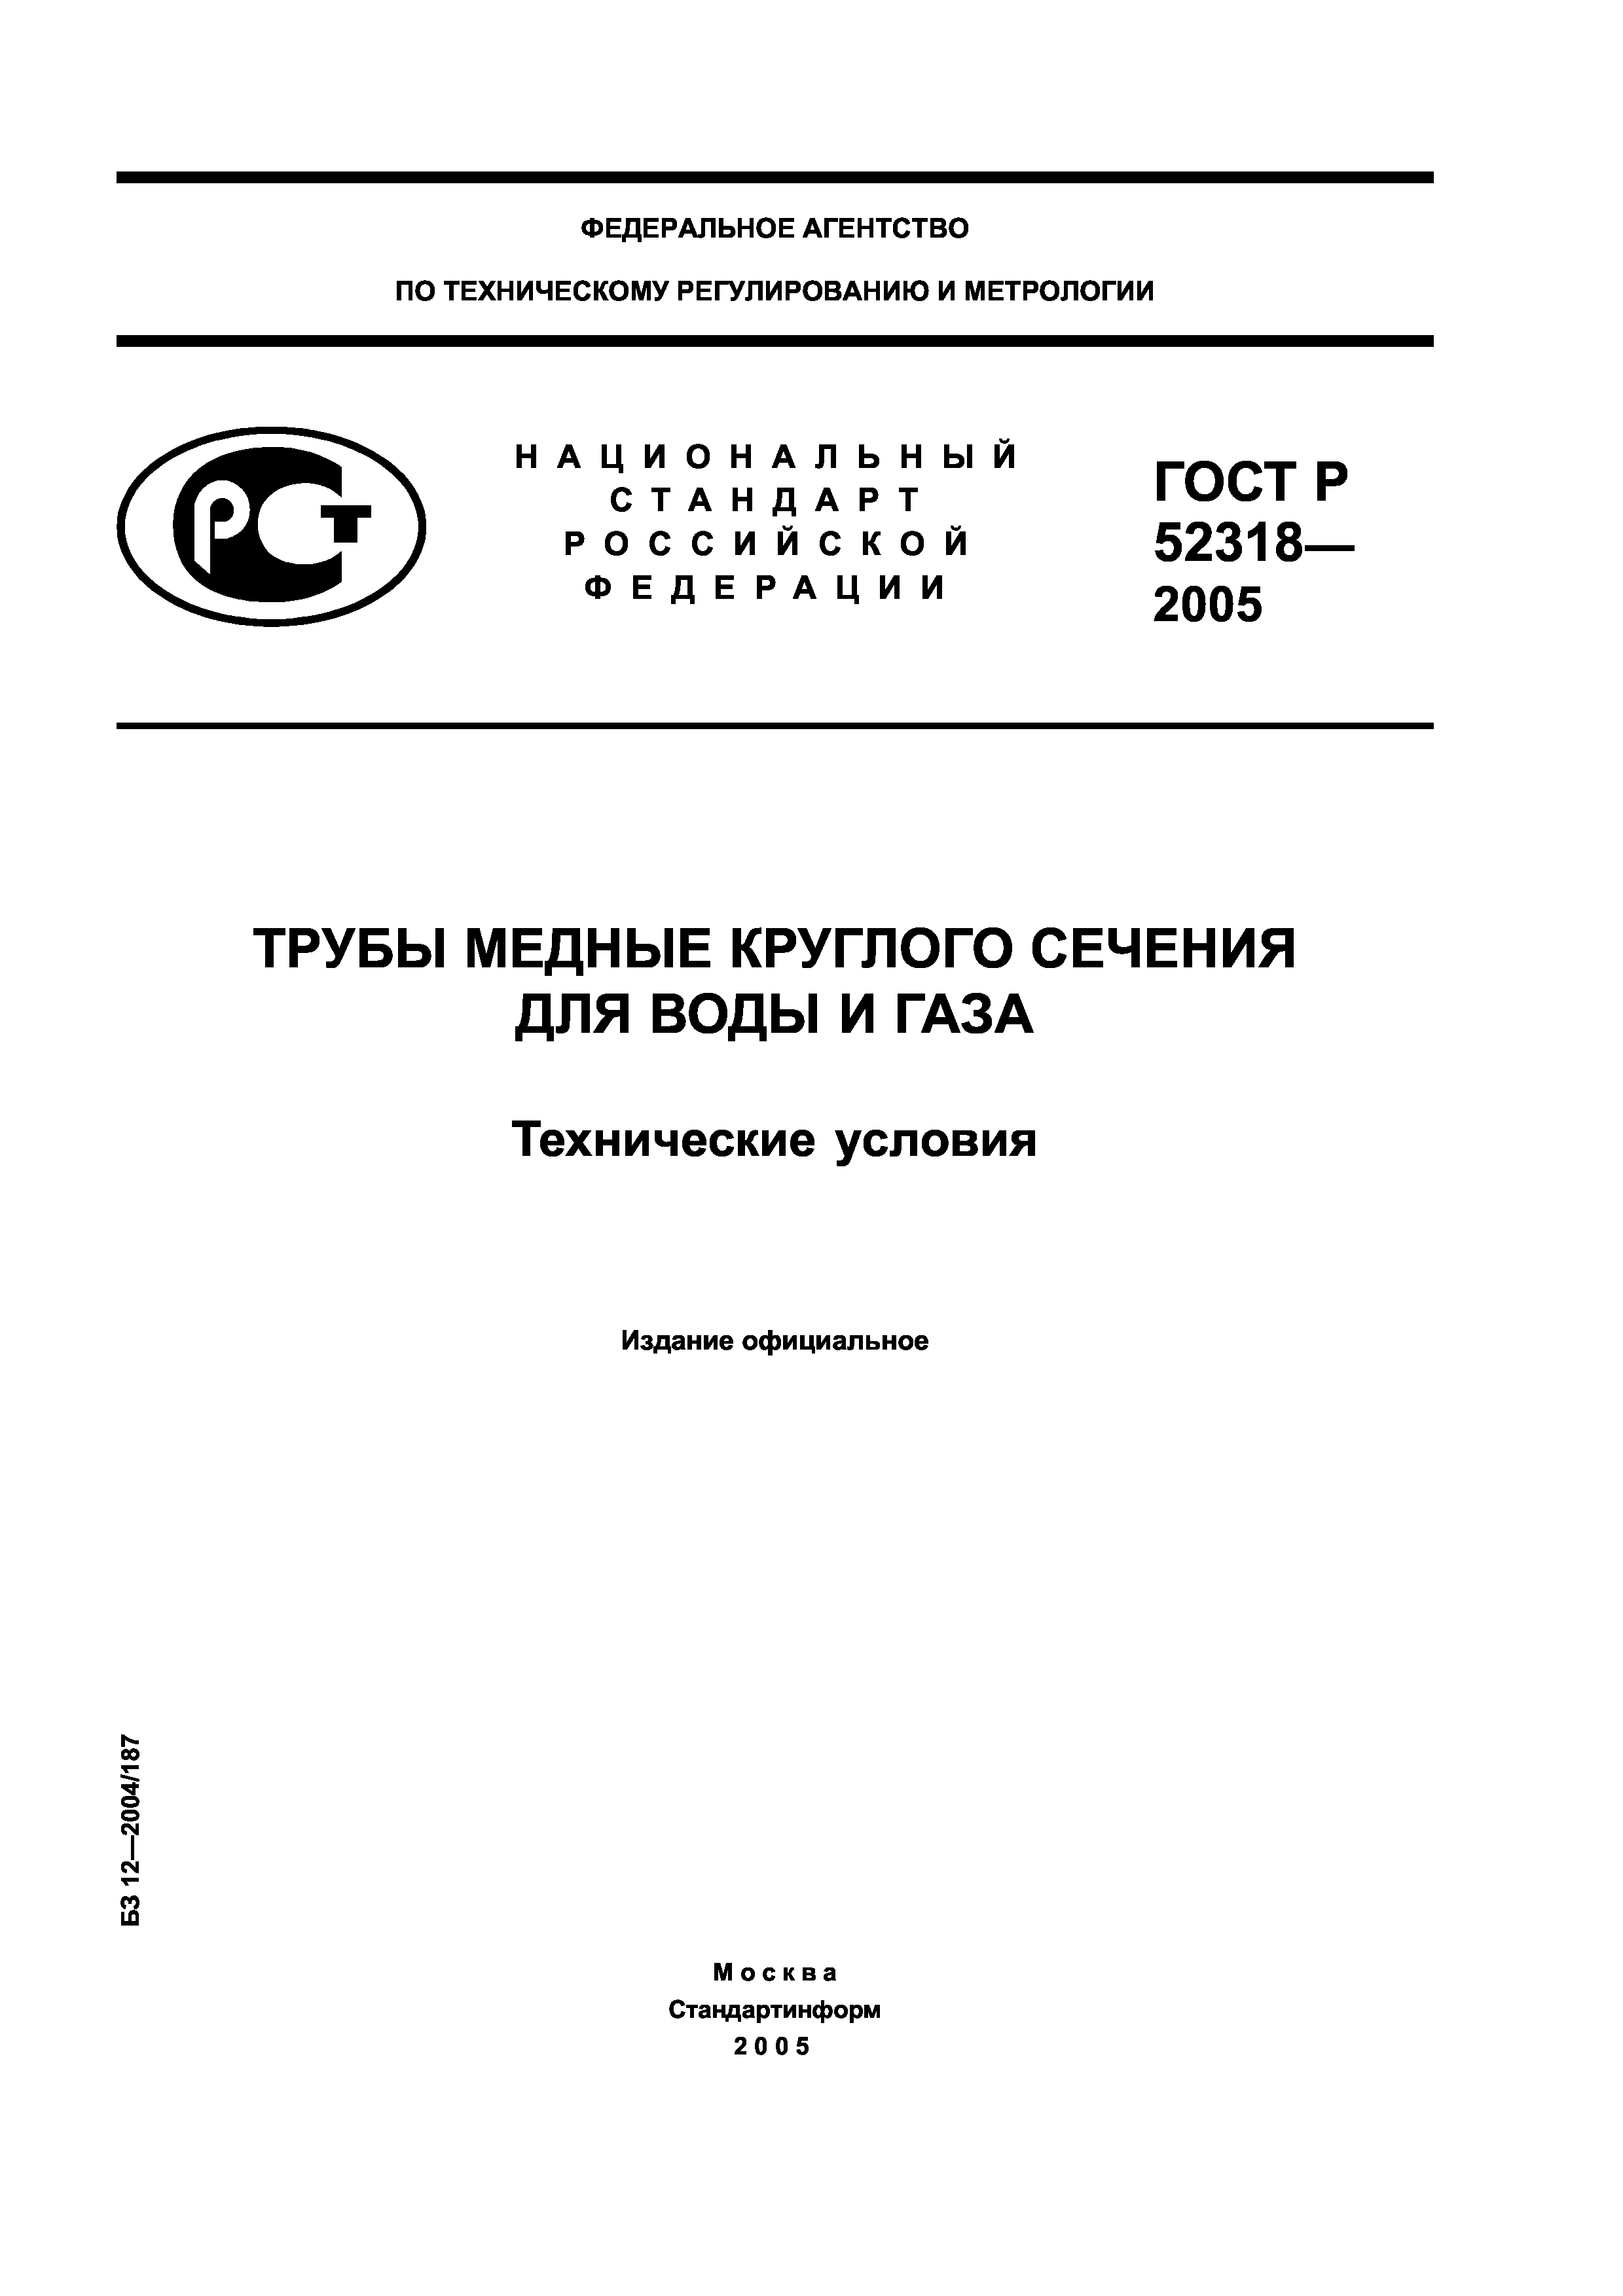 ГОСТ Р 52318-2005